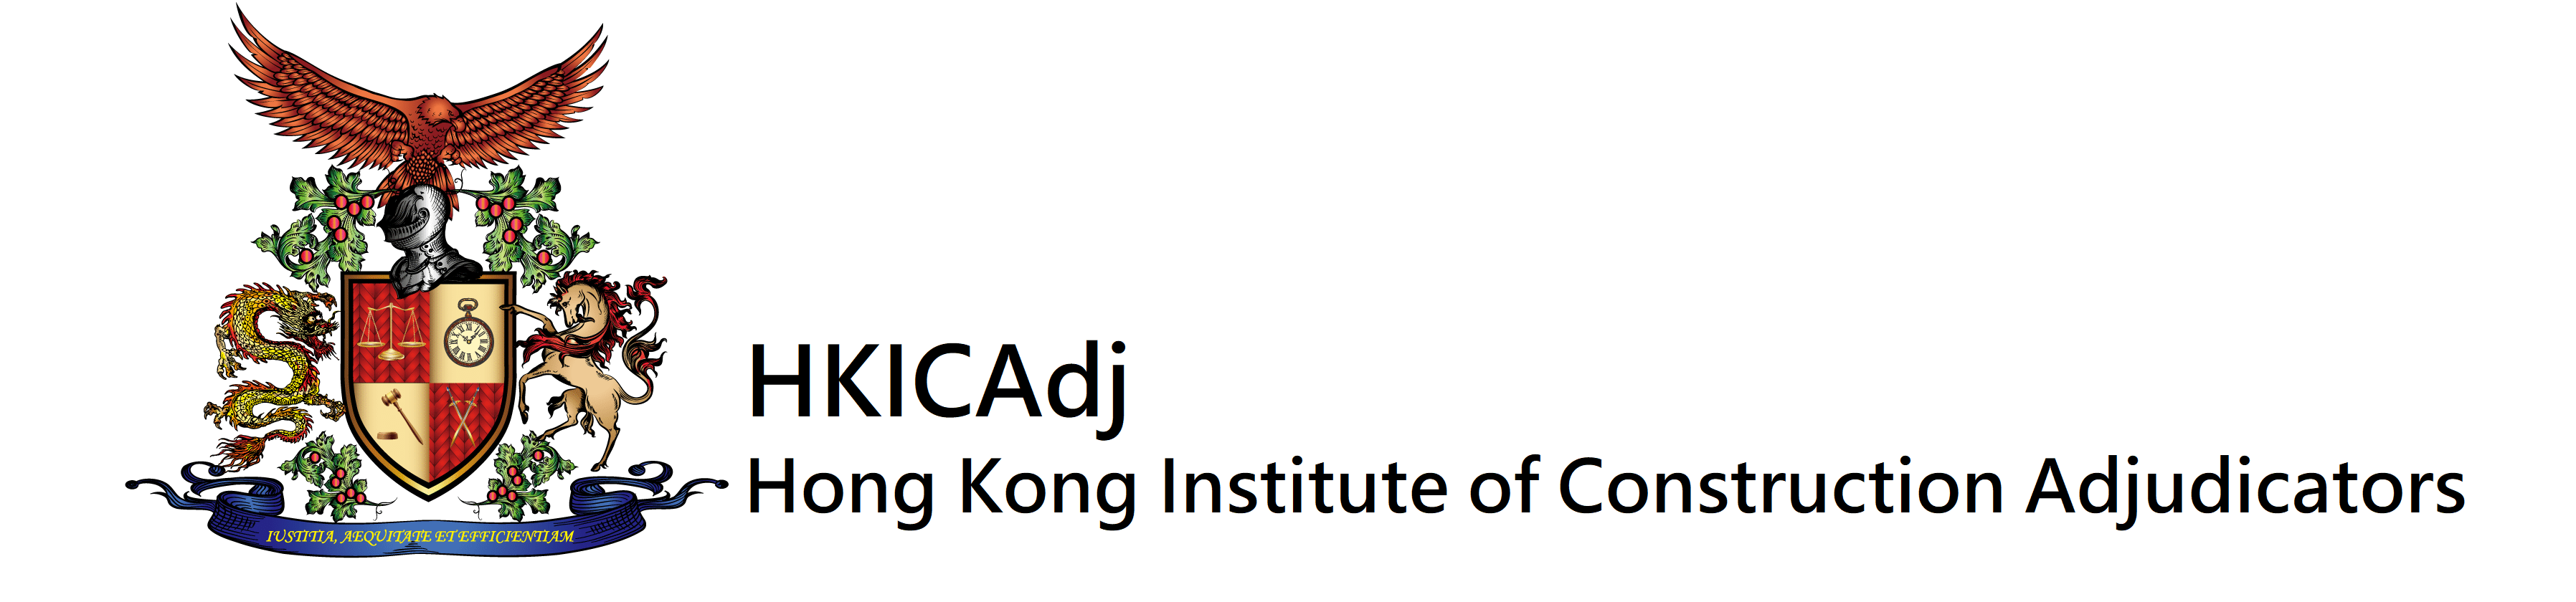 Hong Kong Institute of Construction Adjudicators (HKICAdj) logo